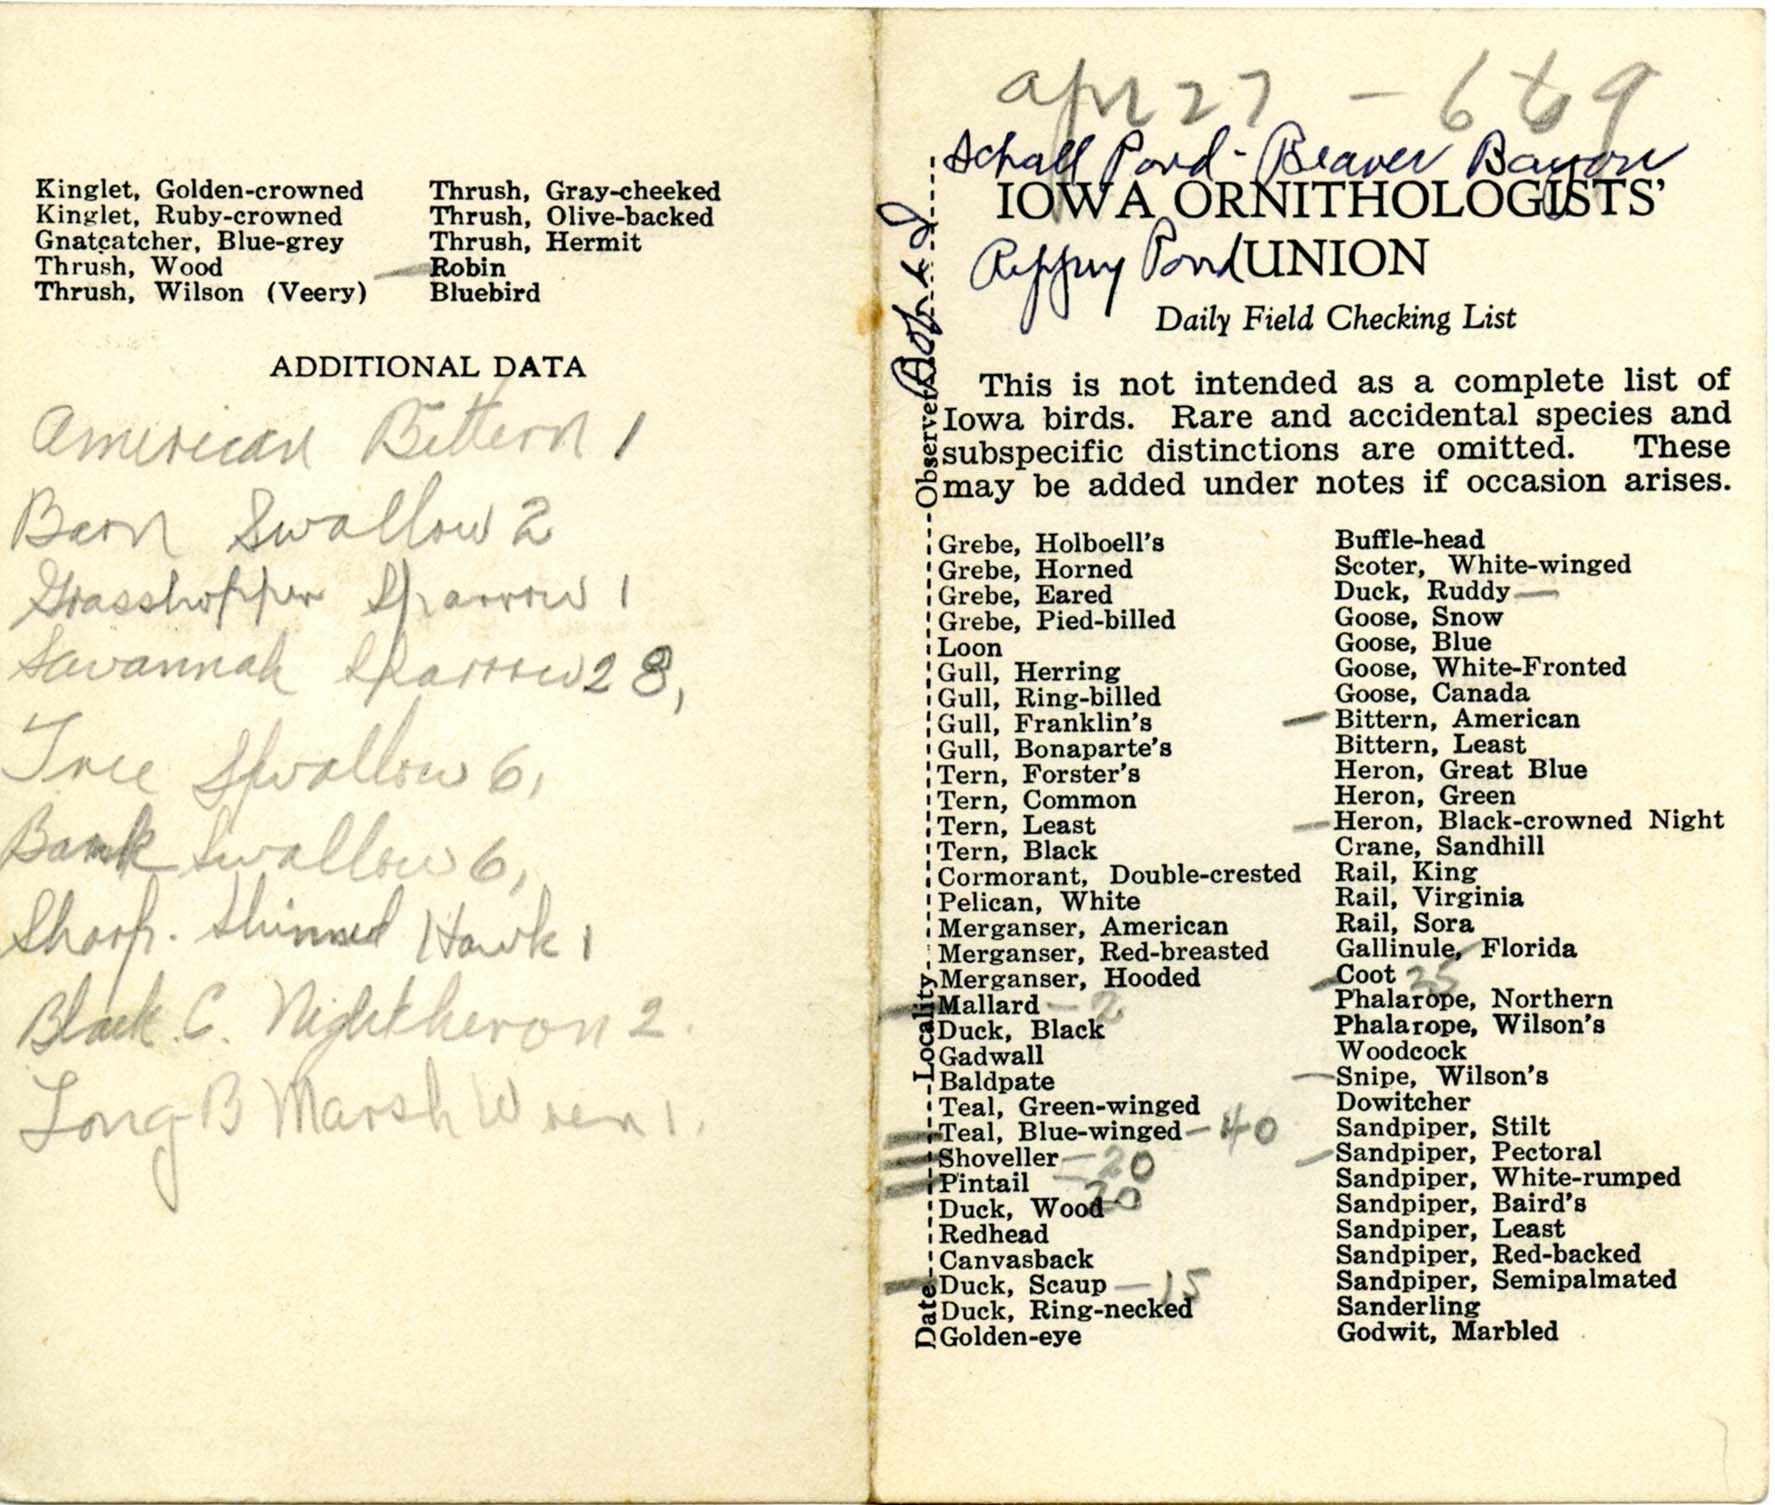 Daily field checking list, Walter Rosene, April 27, 1933